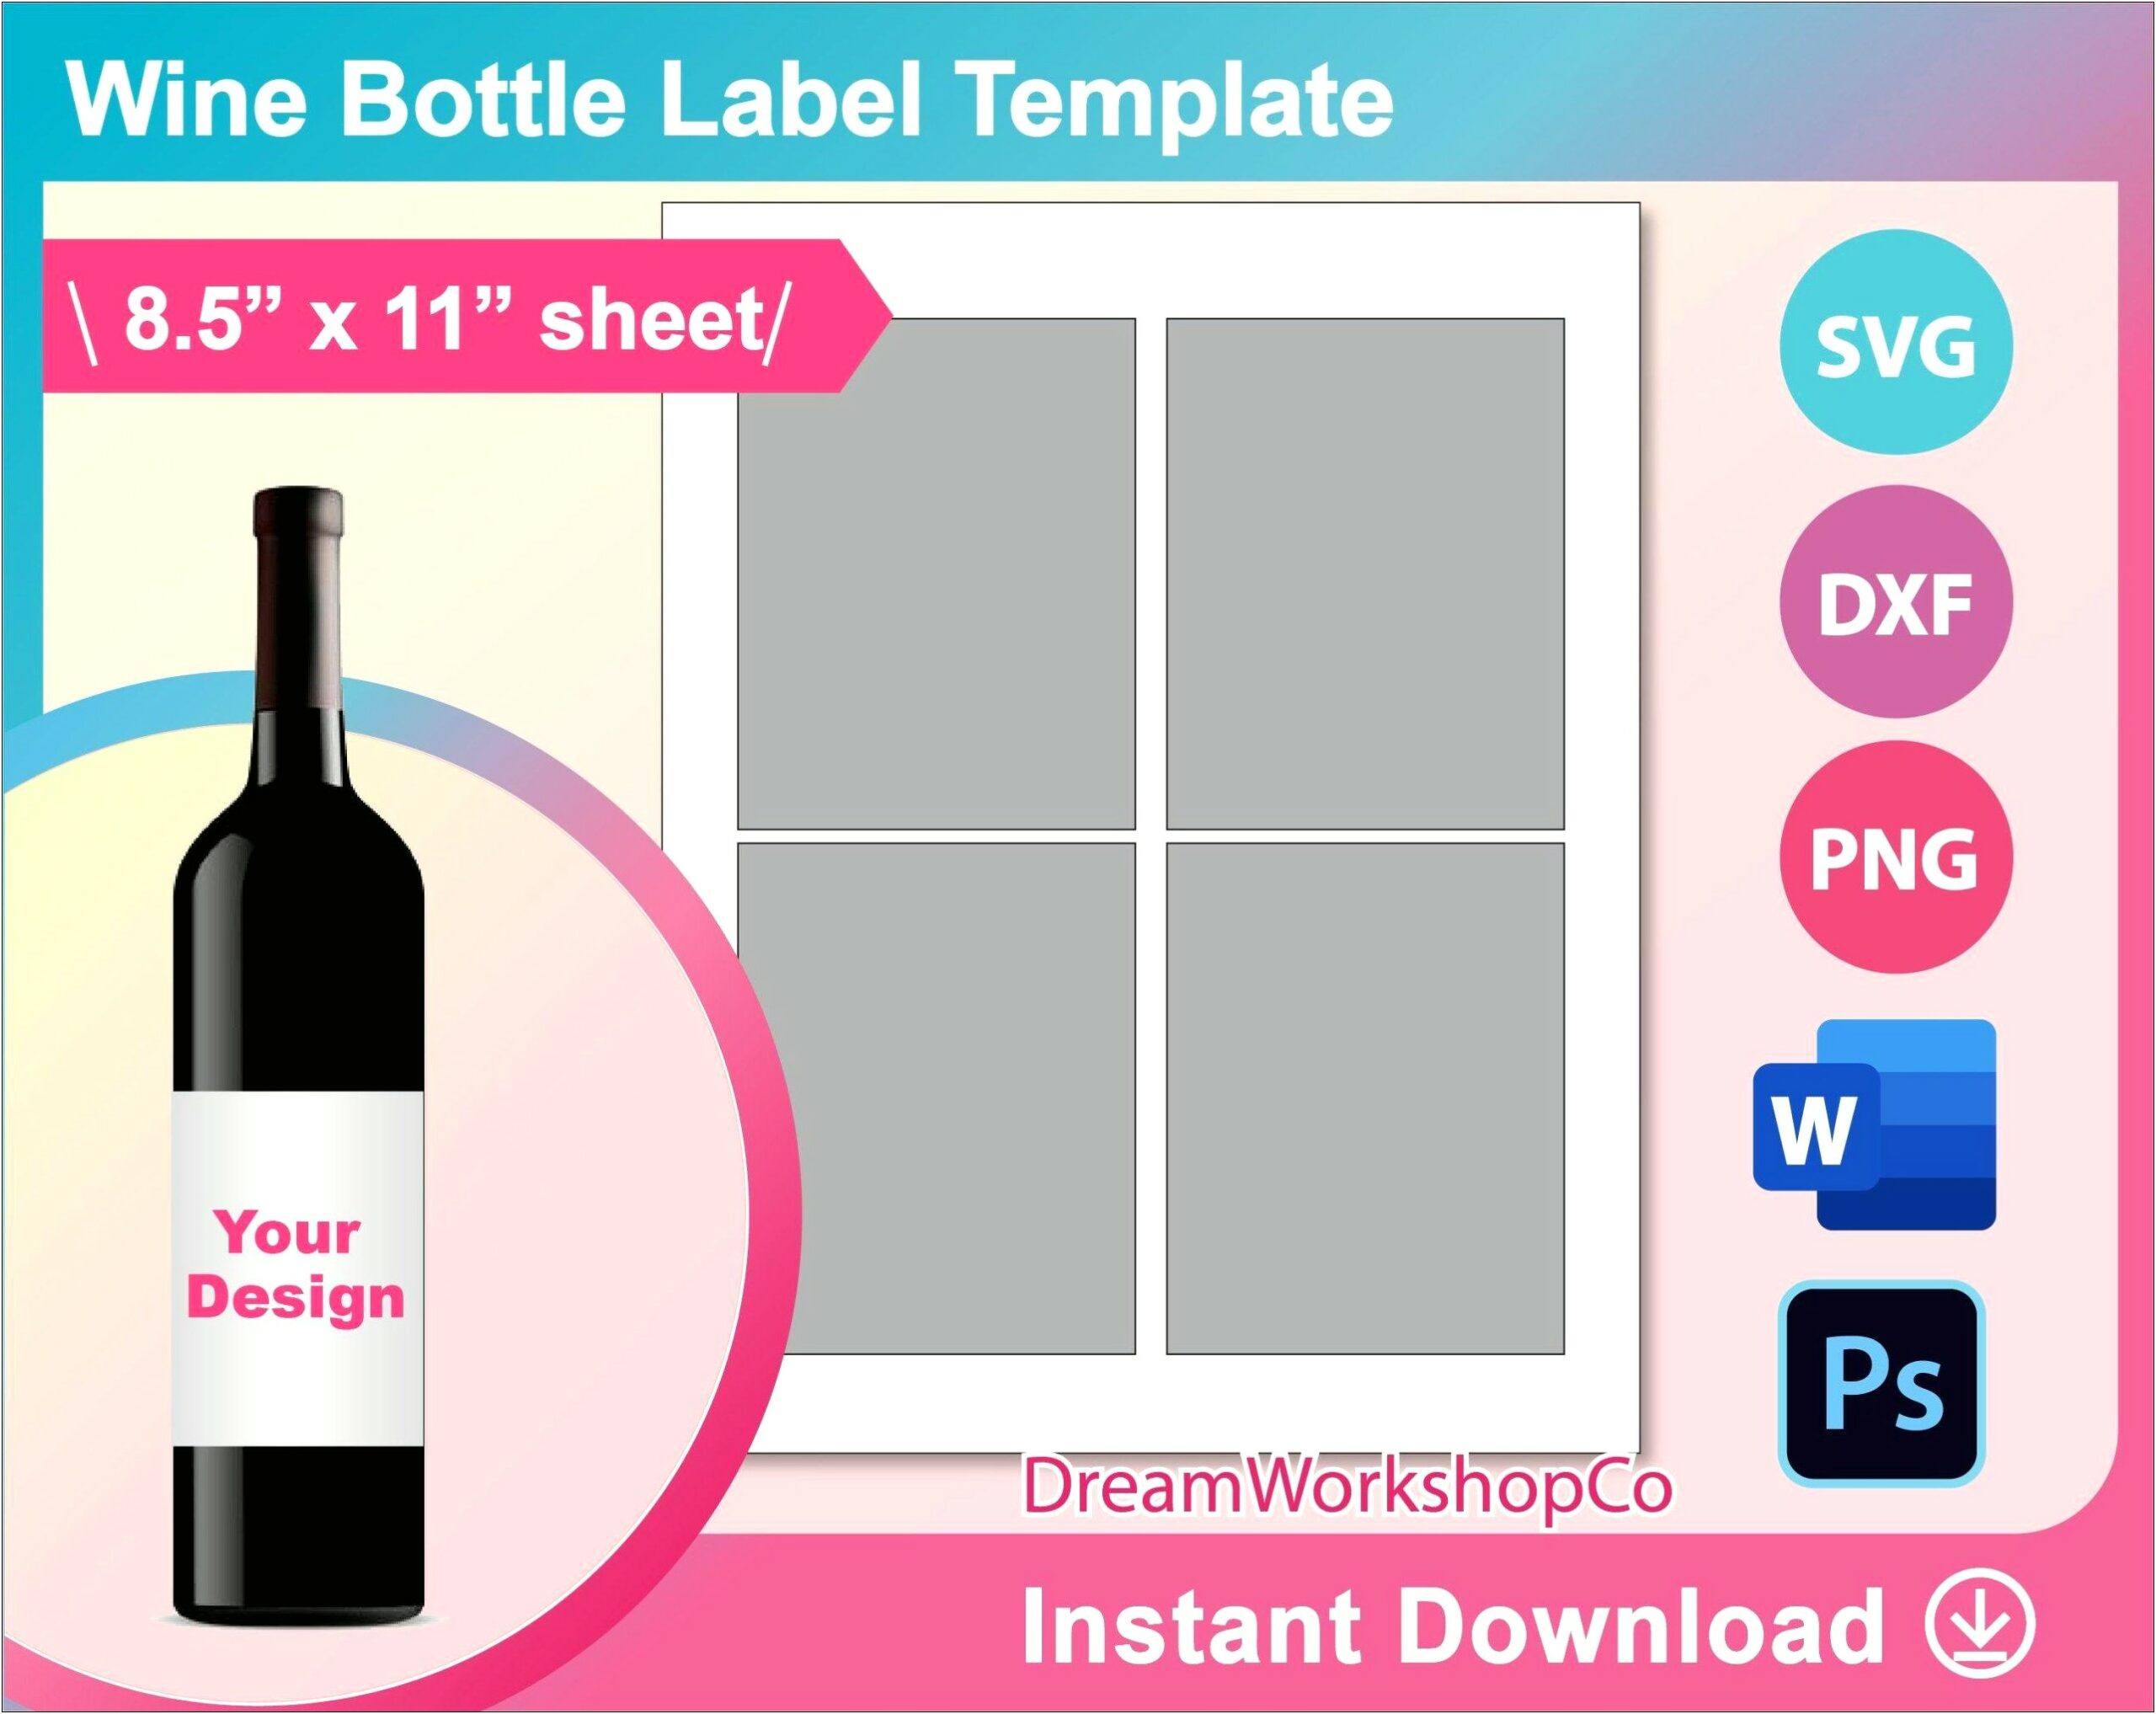 Wine Bottle Label Template Free Download